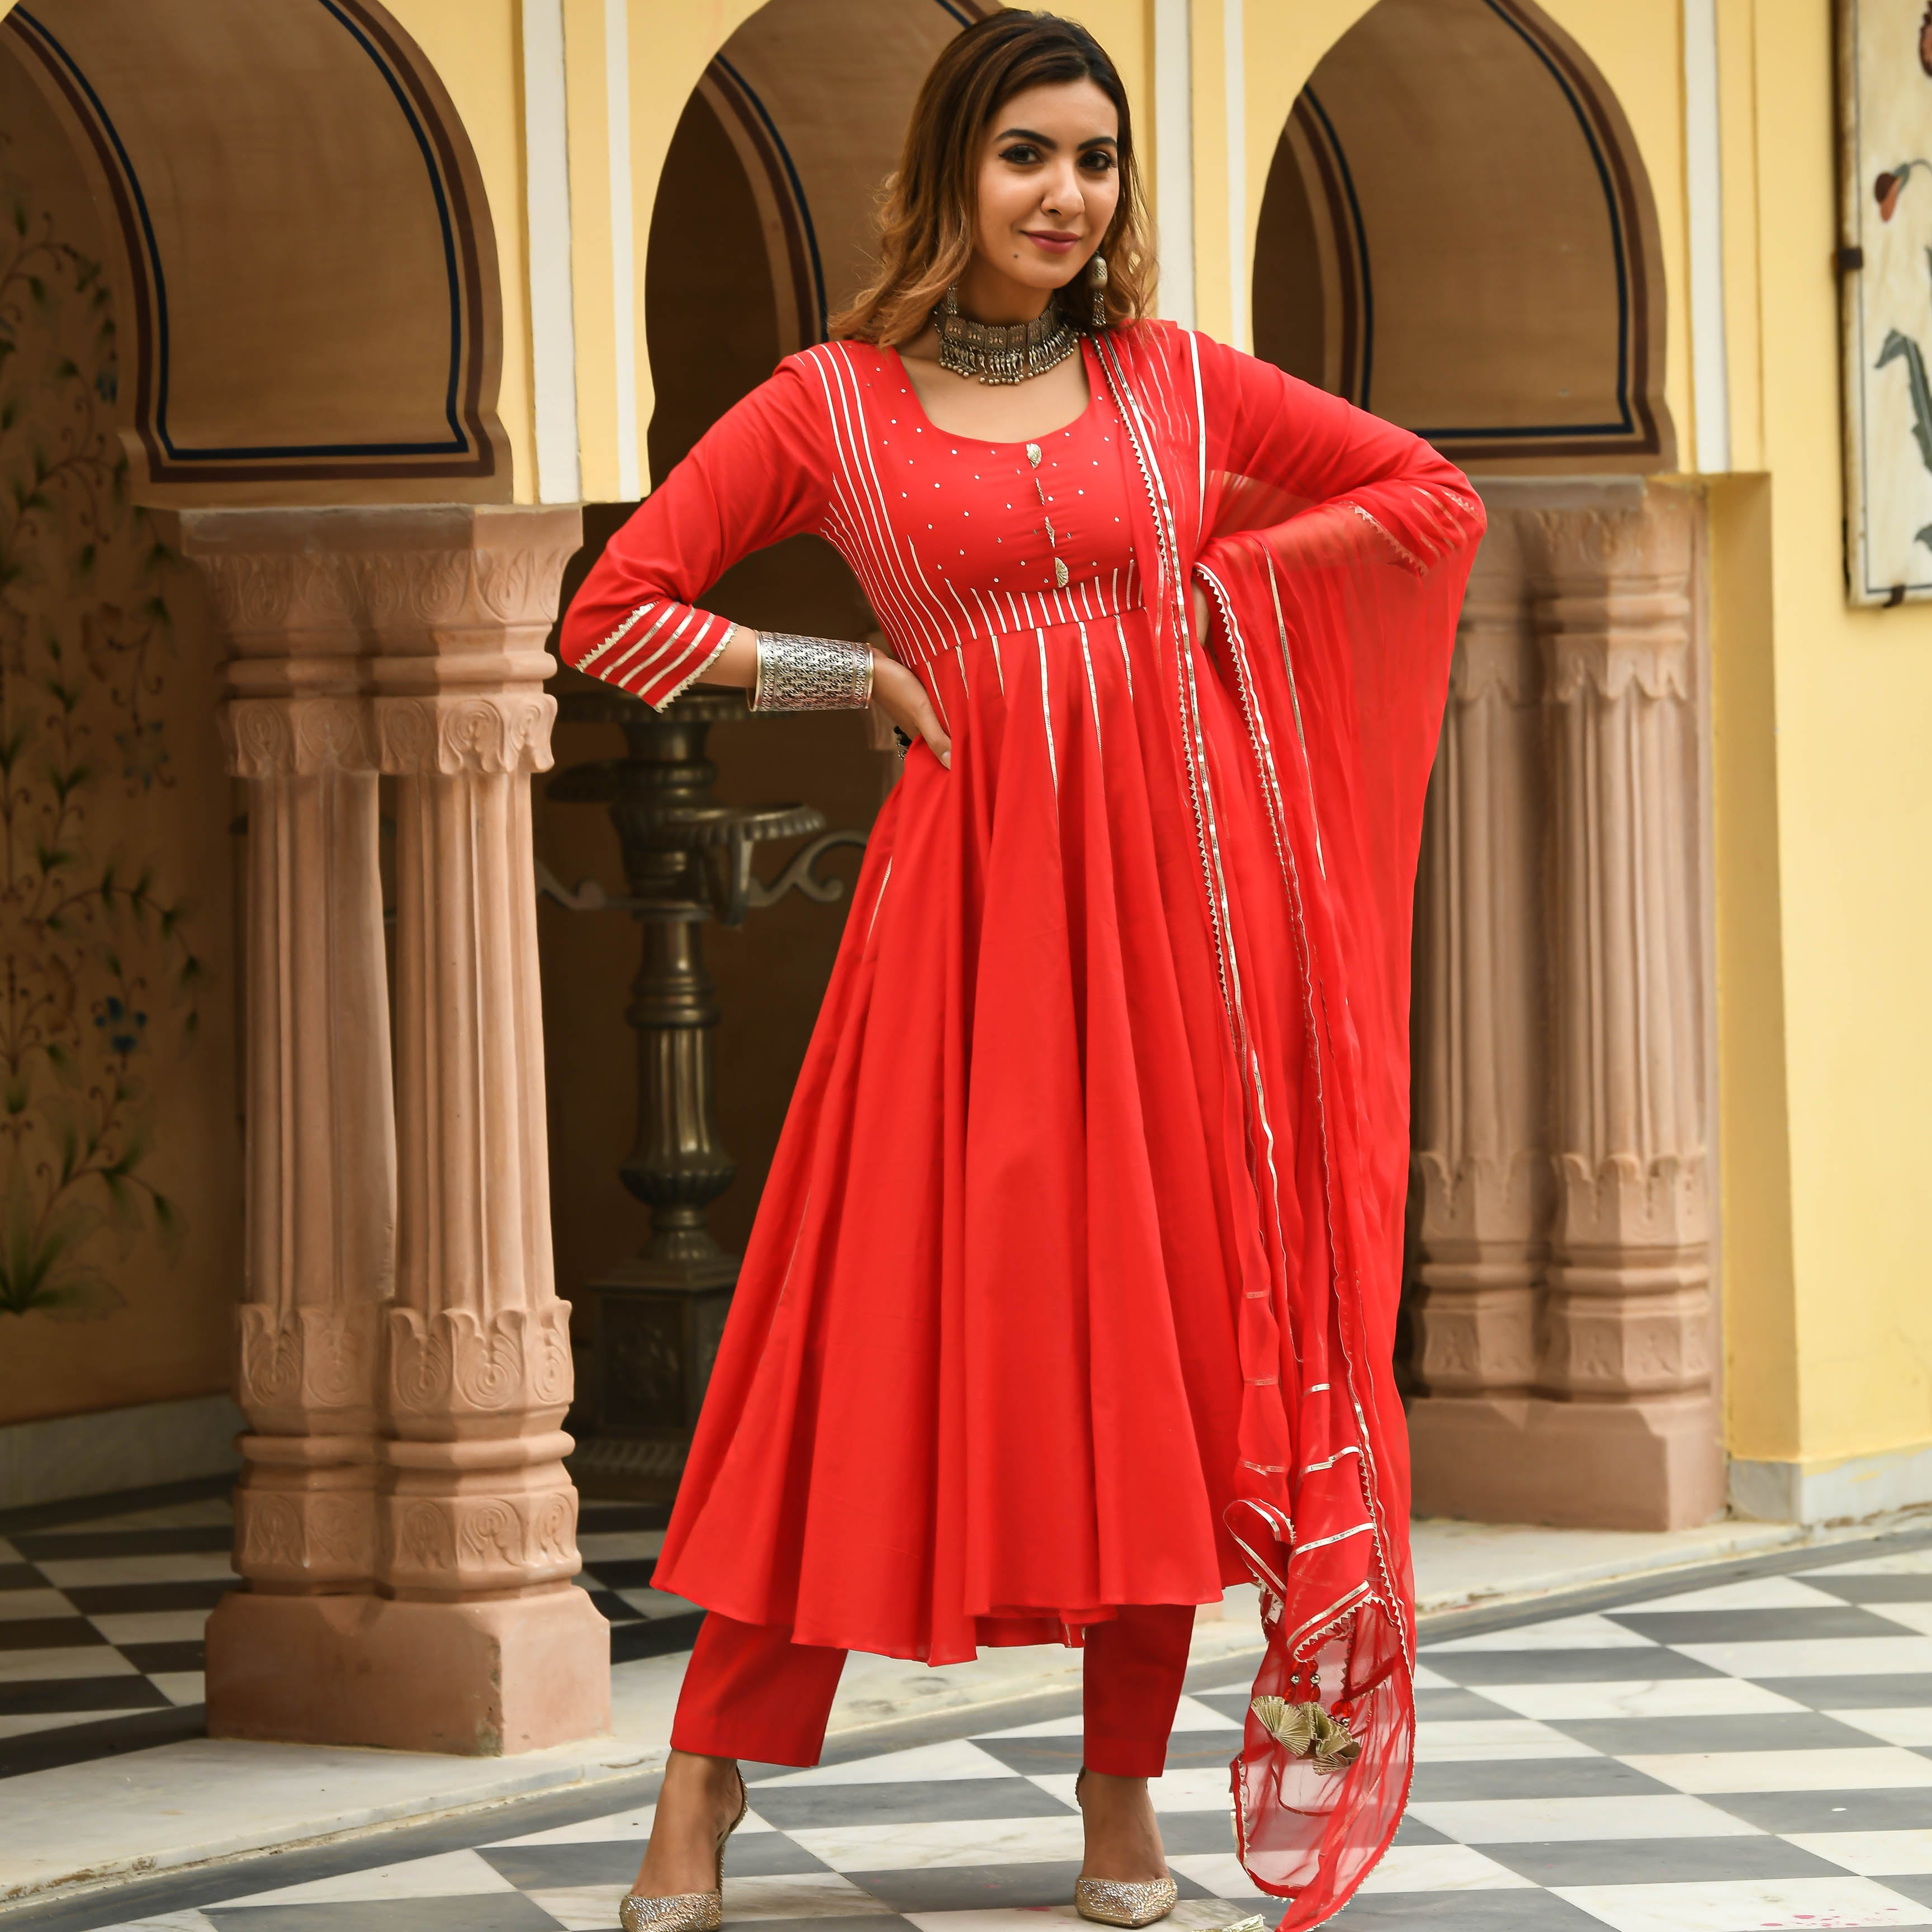 Red Salwar Suit - Buy Online on Clothsvilla.com at best price